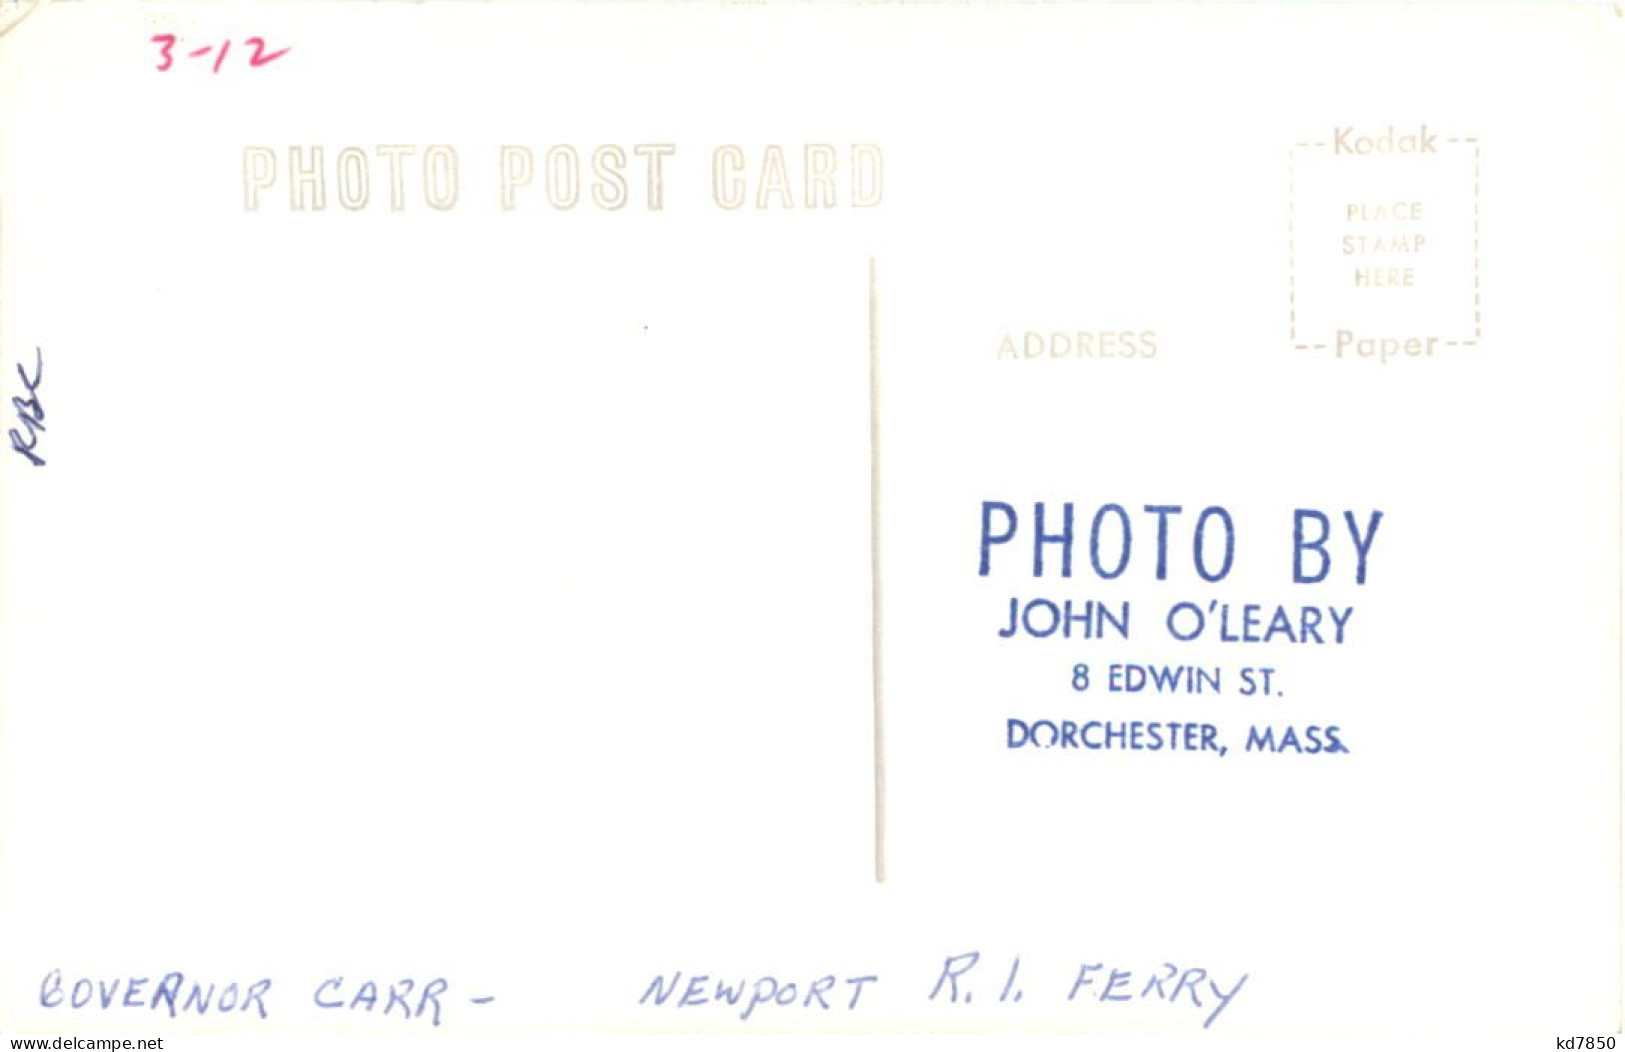 Governor Carr - Newport RI Ferry - Veerboten